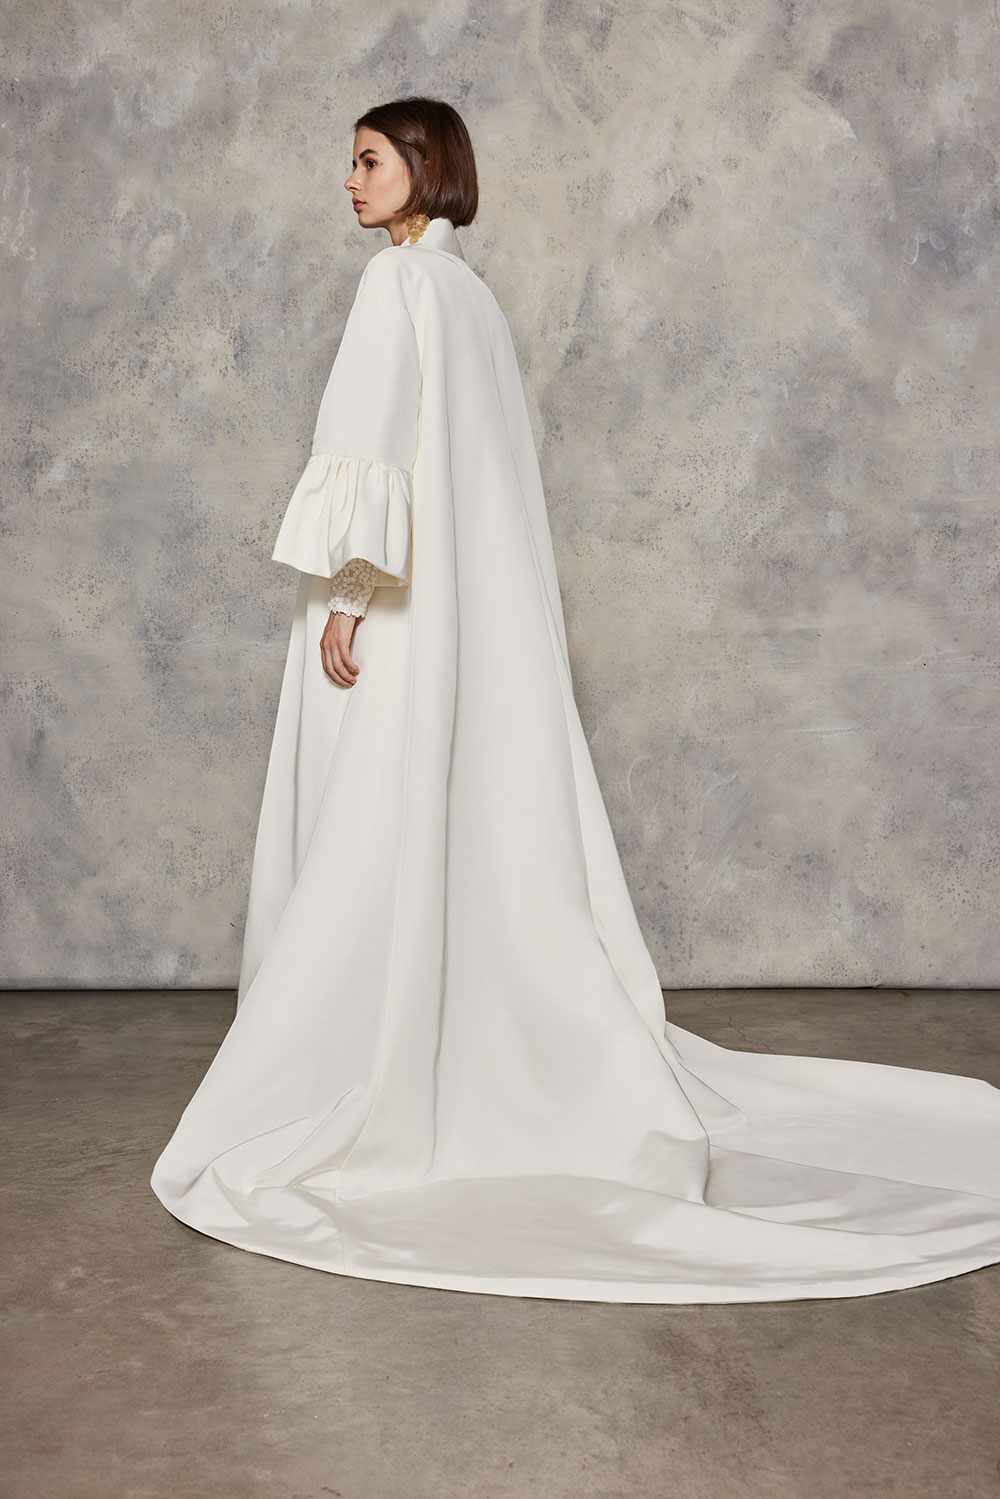 Jesus Peiro 2468 bridal coat